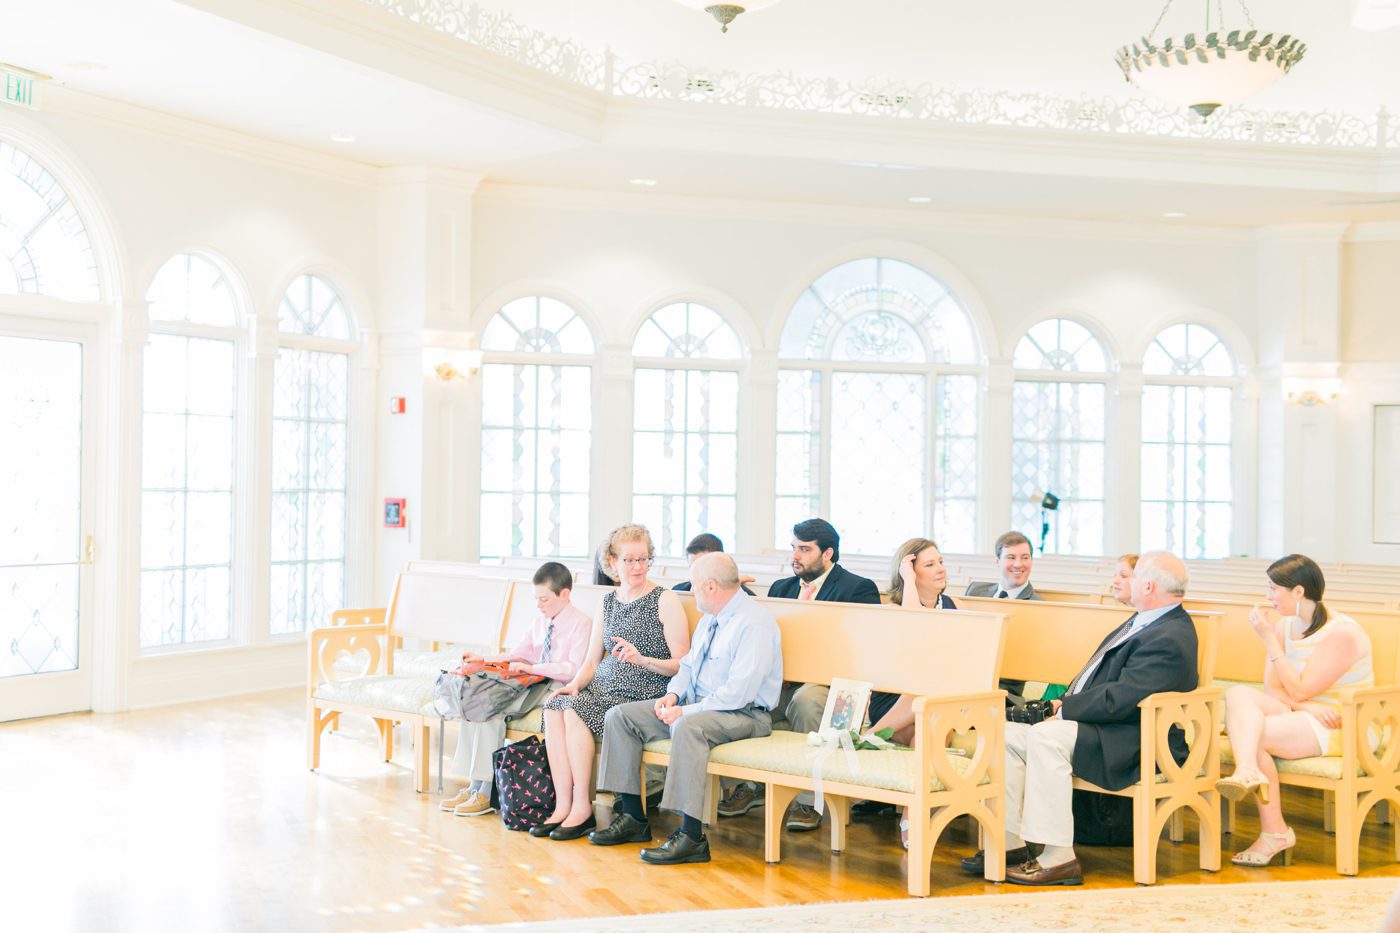 Guests sitting in Disneys wedding pavilion for wedding ceremony 